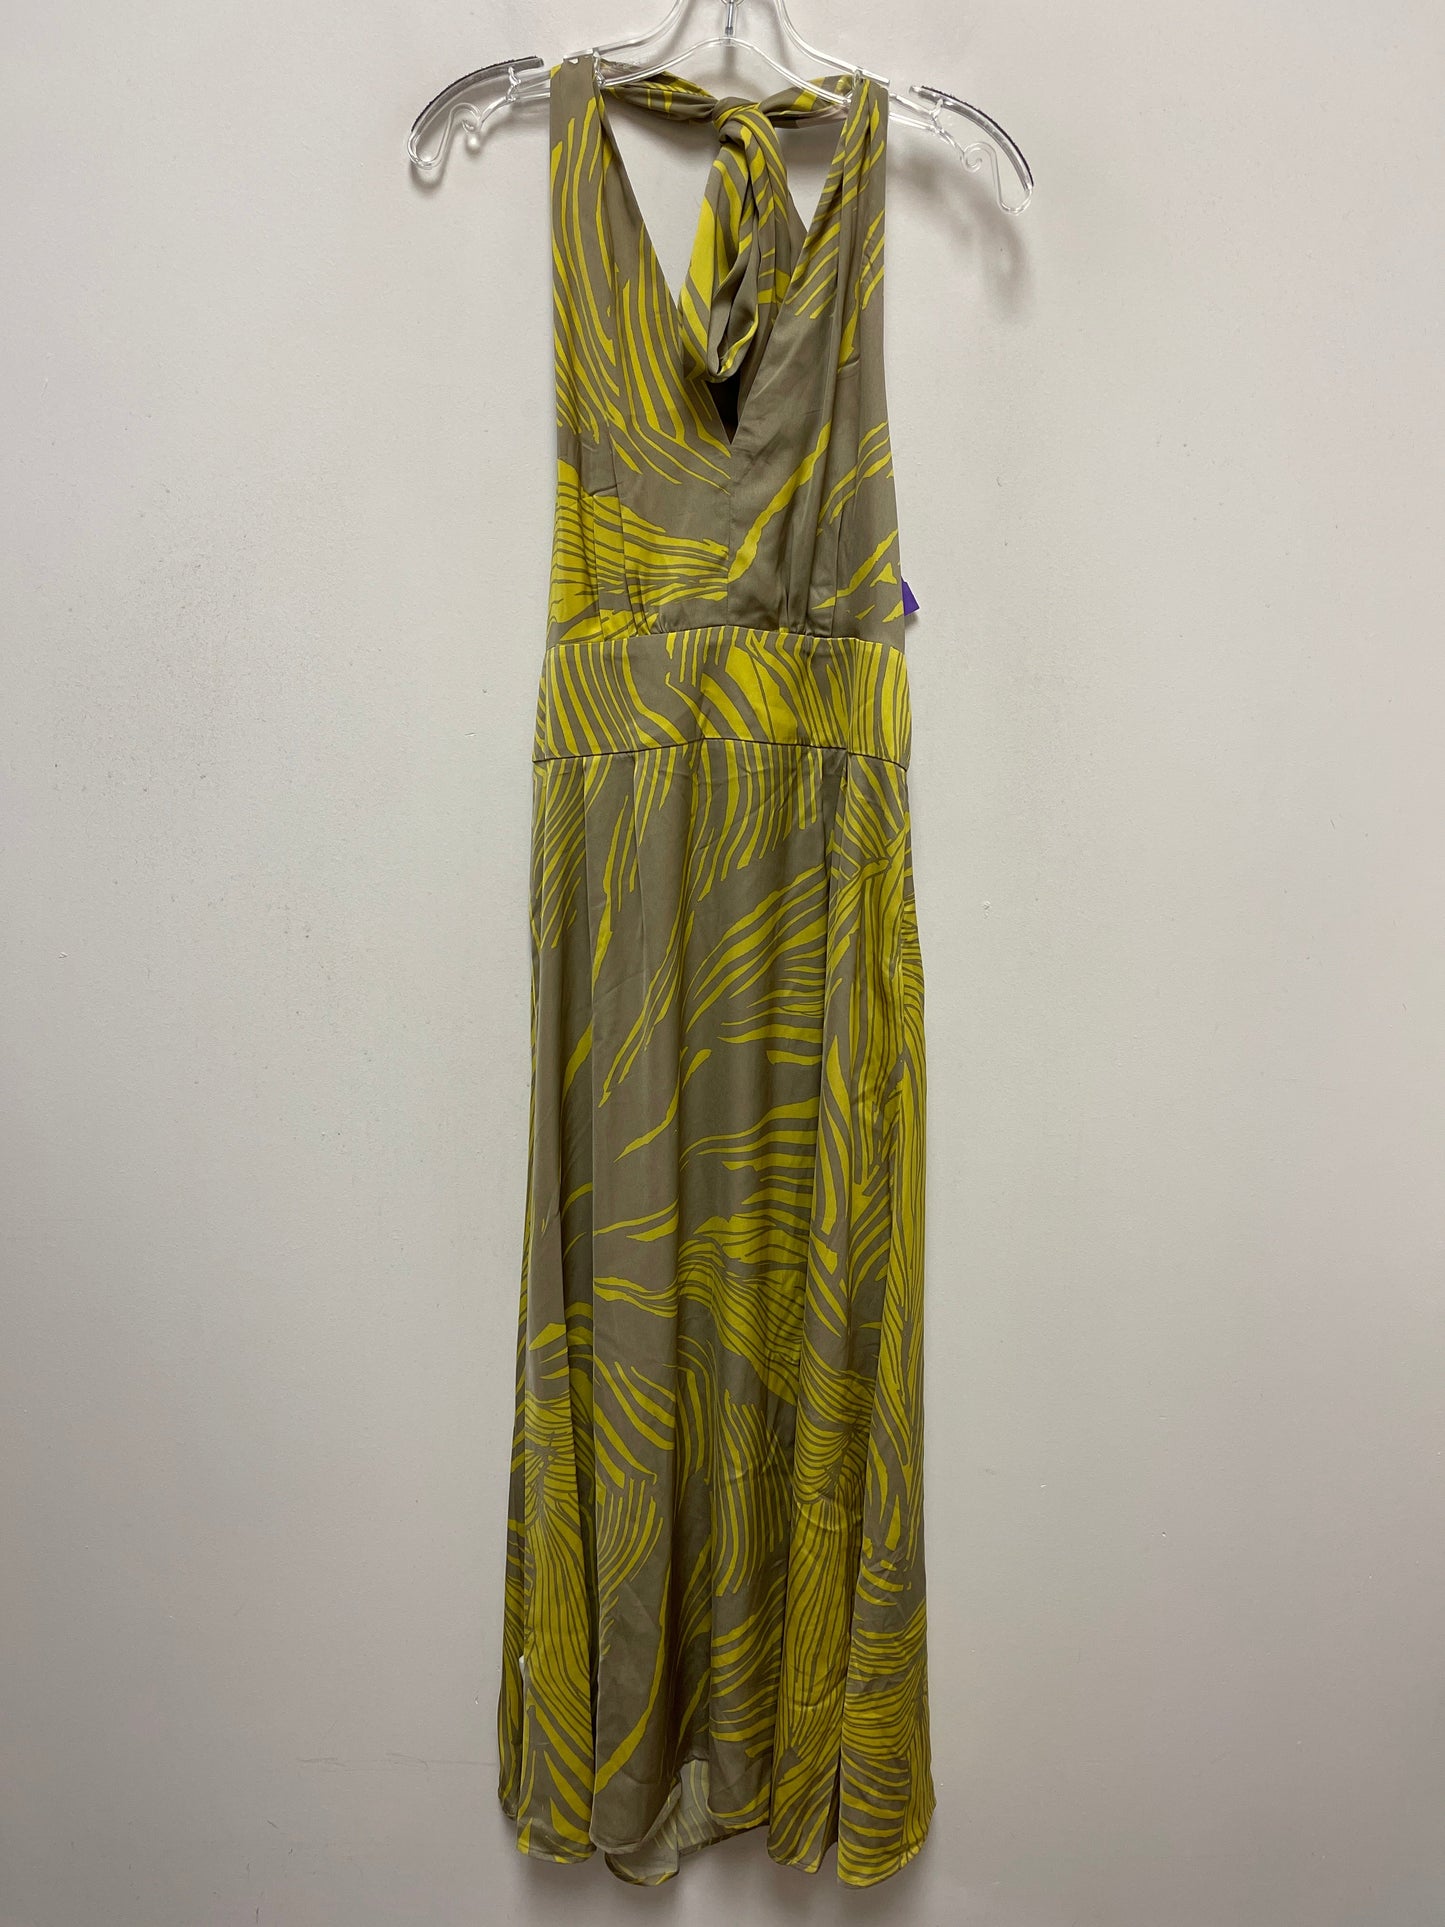 Green & Tan Dress Casual Maxi Banana Republic, Size S